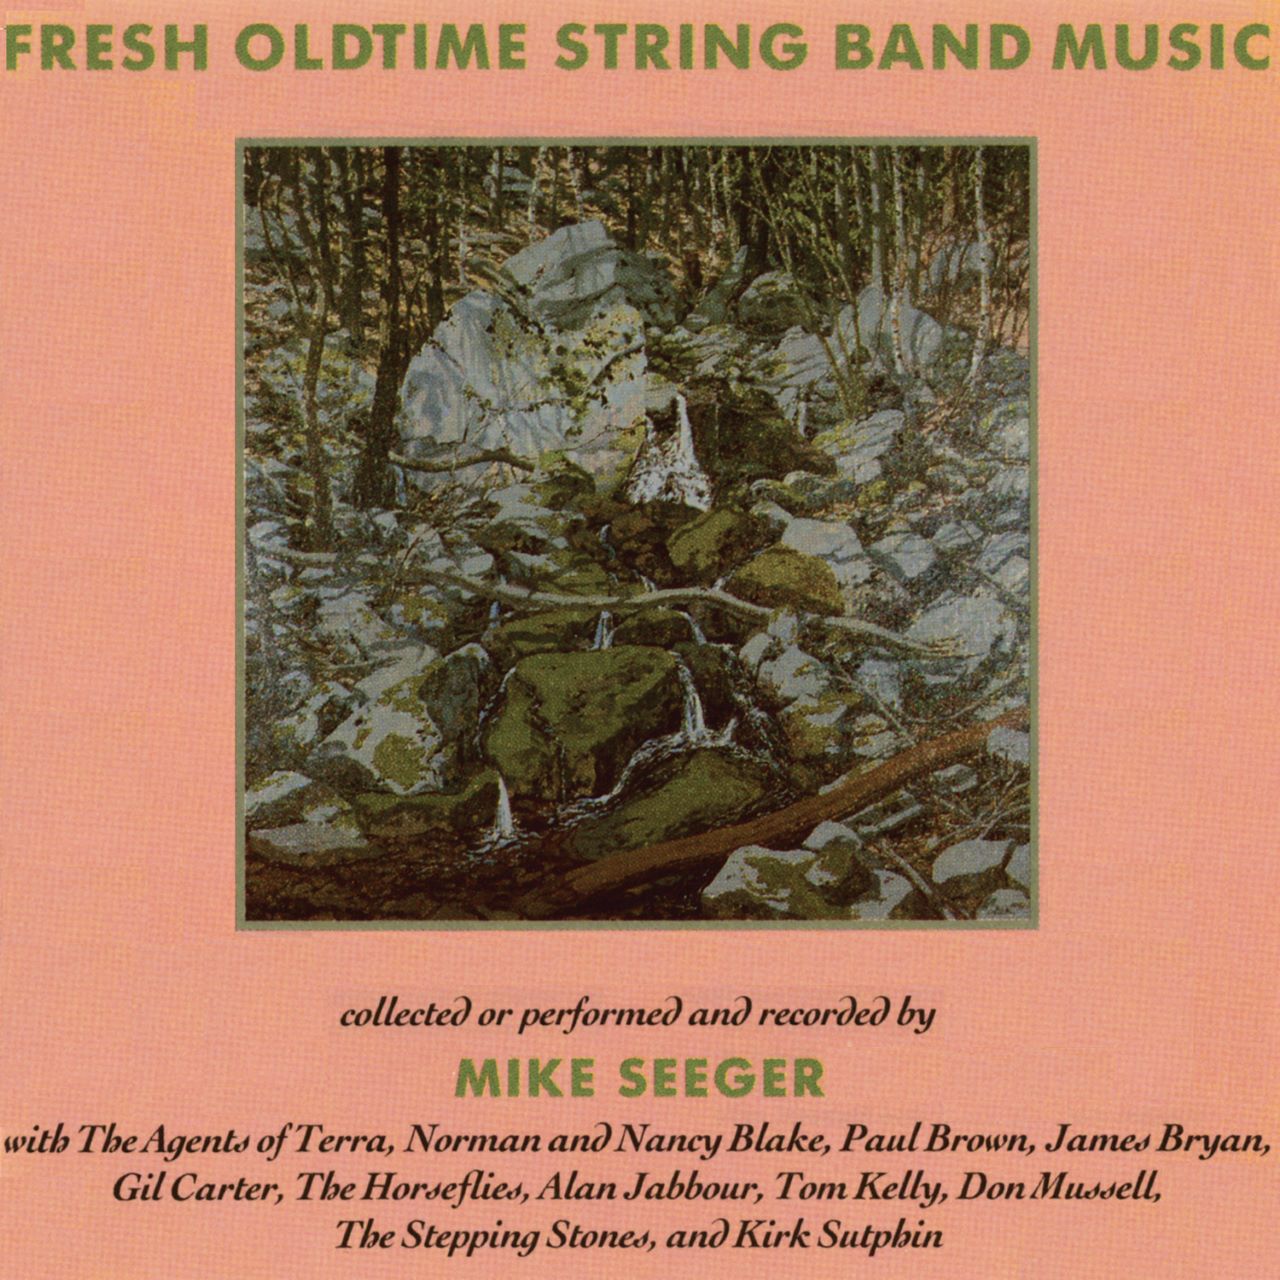 Mike Seeger & A.A.V.V. - Fresh Oldtime String Band Music cover album